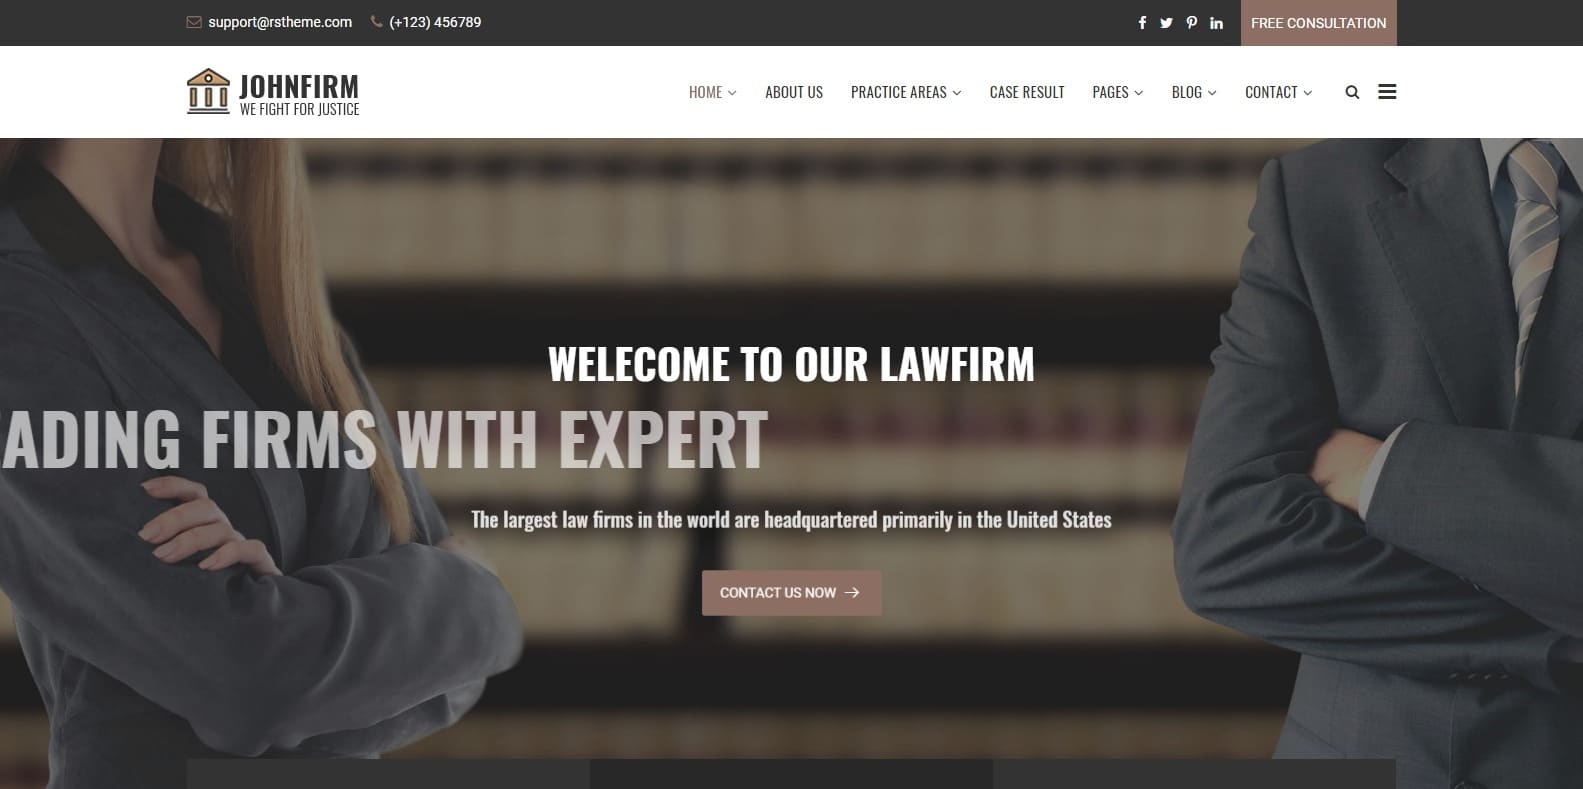 johnfirm-attorney-website-template